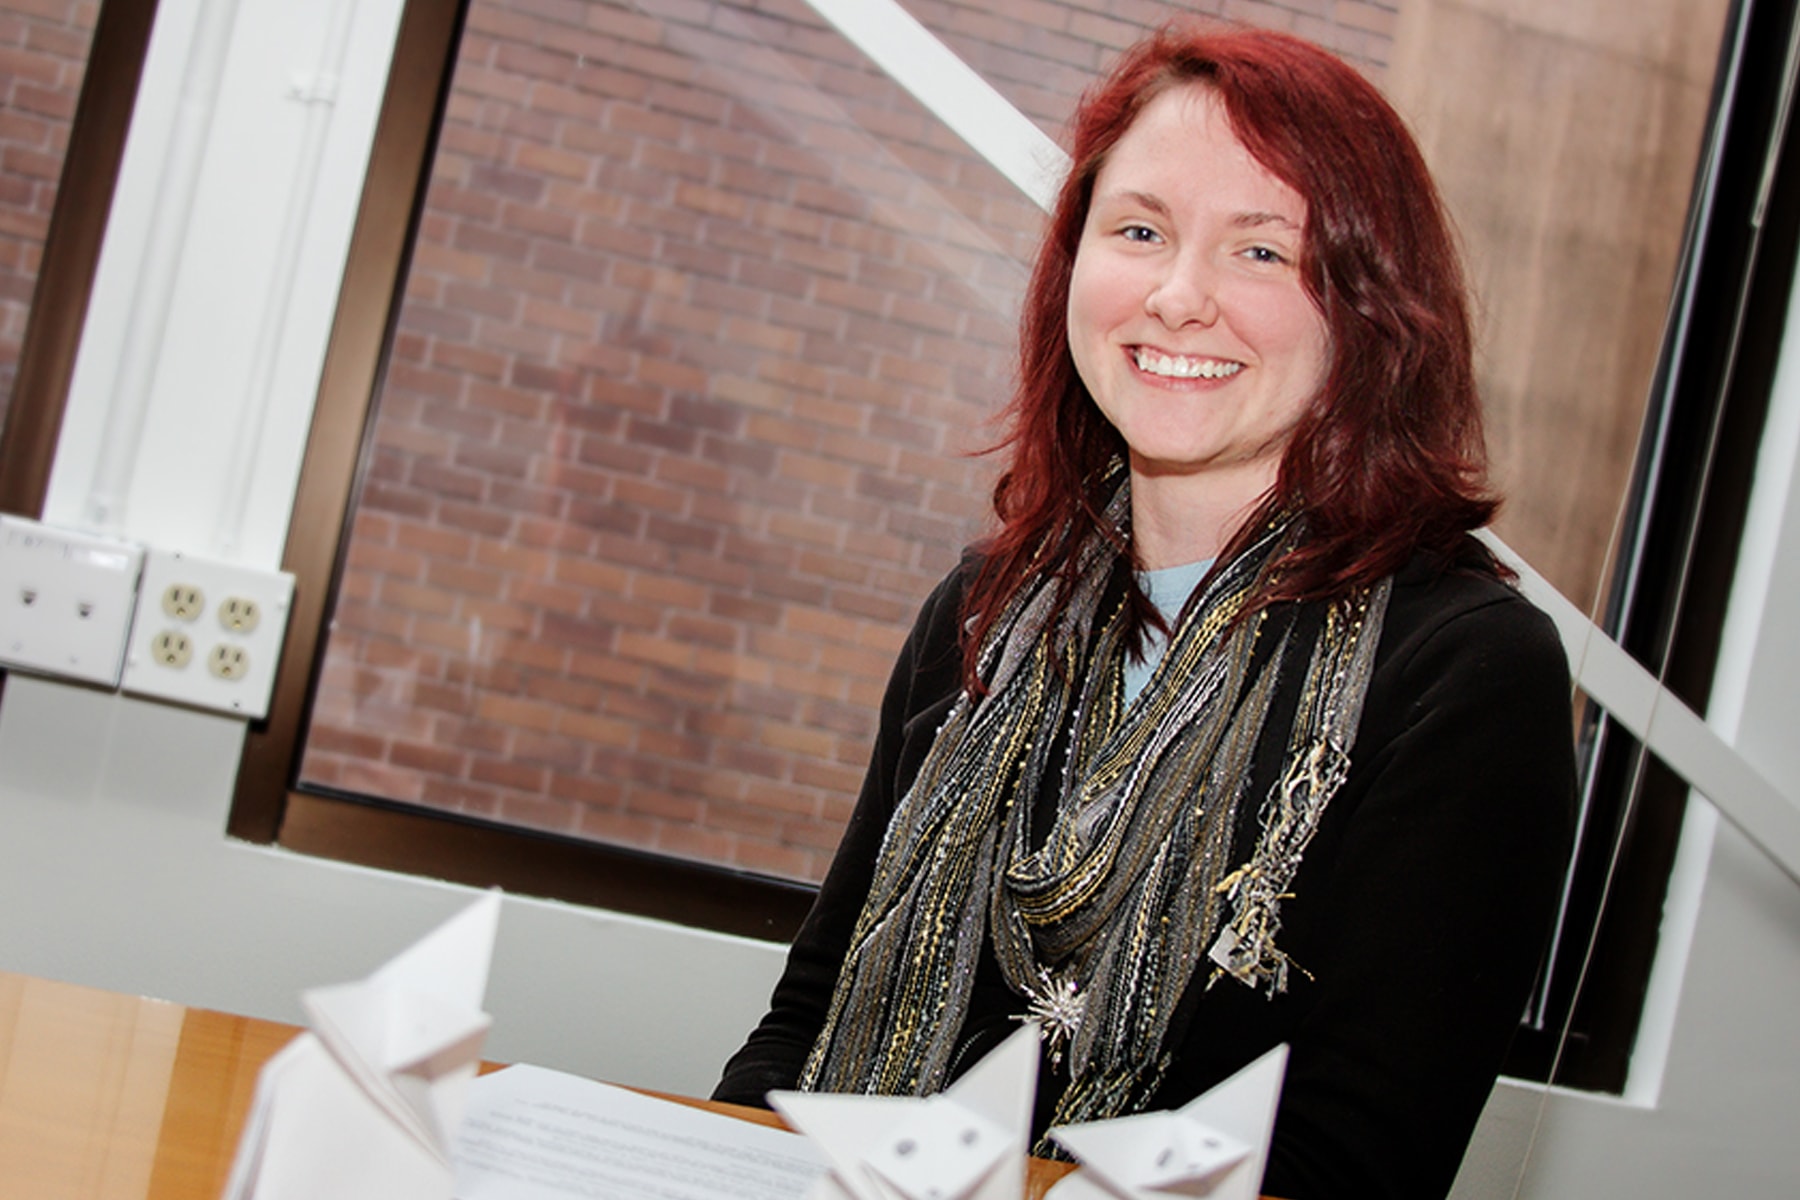 DigiPen BFA alumna Anne Feeney smiling in front of a window in the E-Line Media office